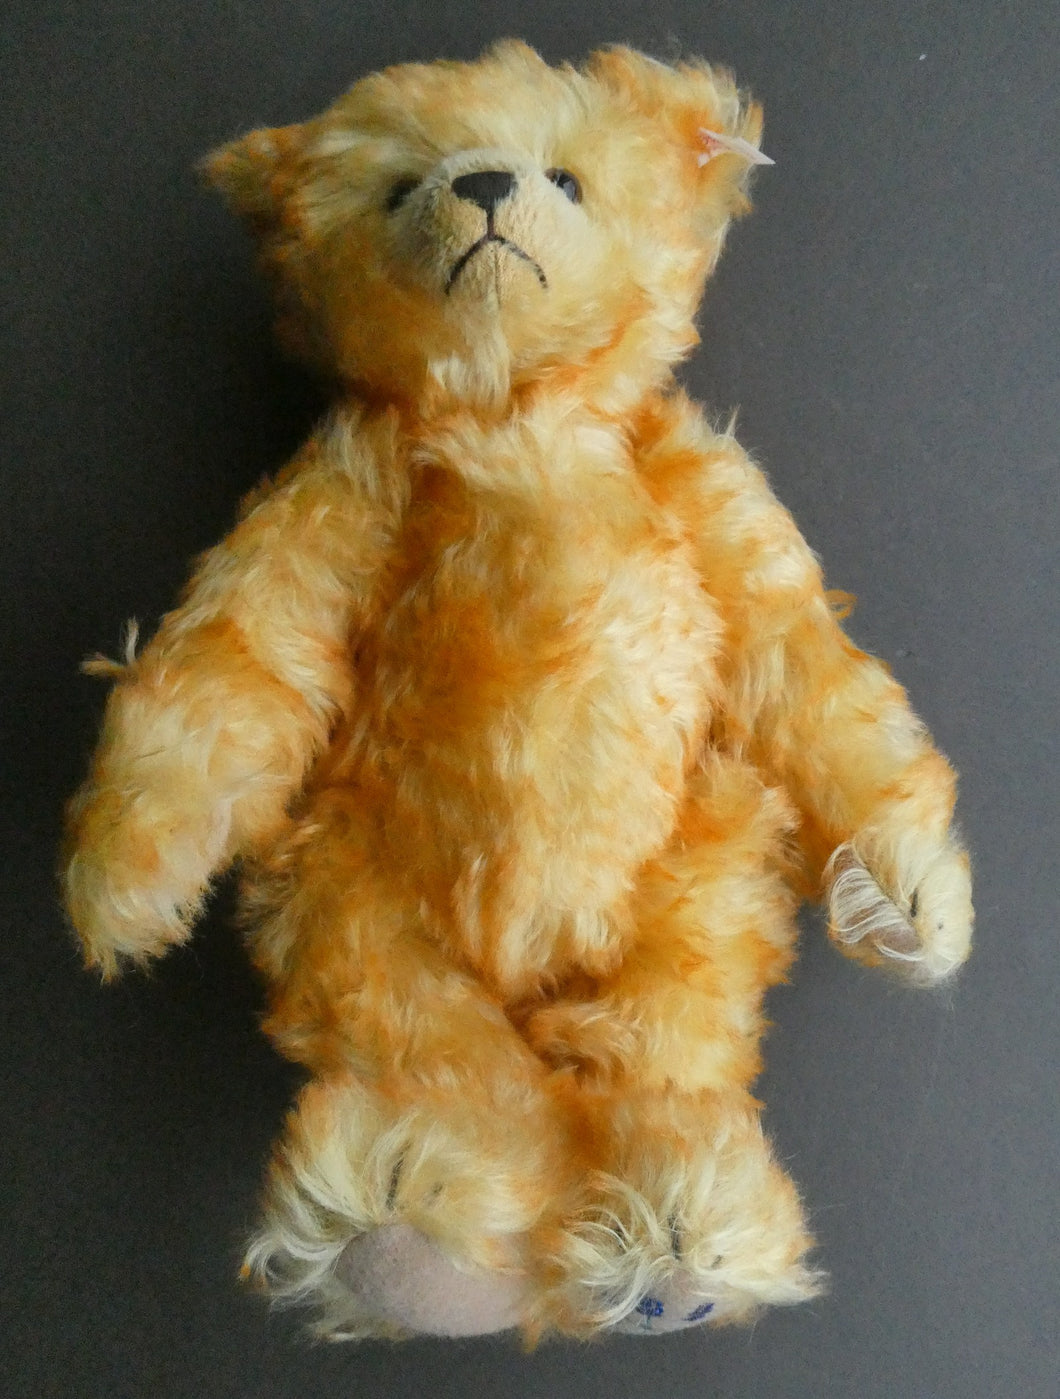 Special Vintage FRENCH EDITION Steiff Teddy Bear. La Provencale Teddy. EAN 660122